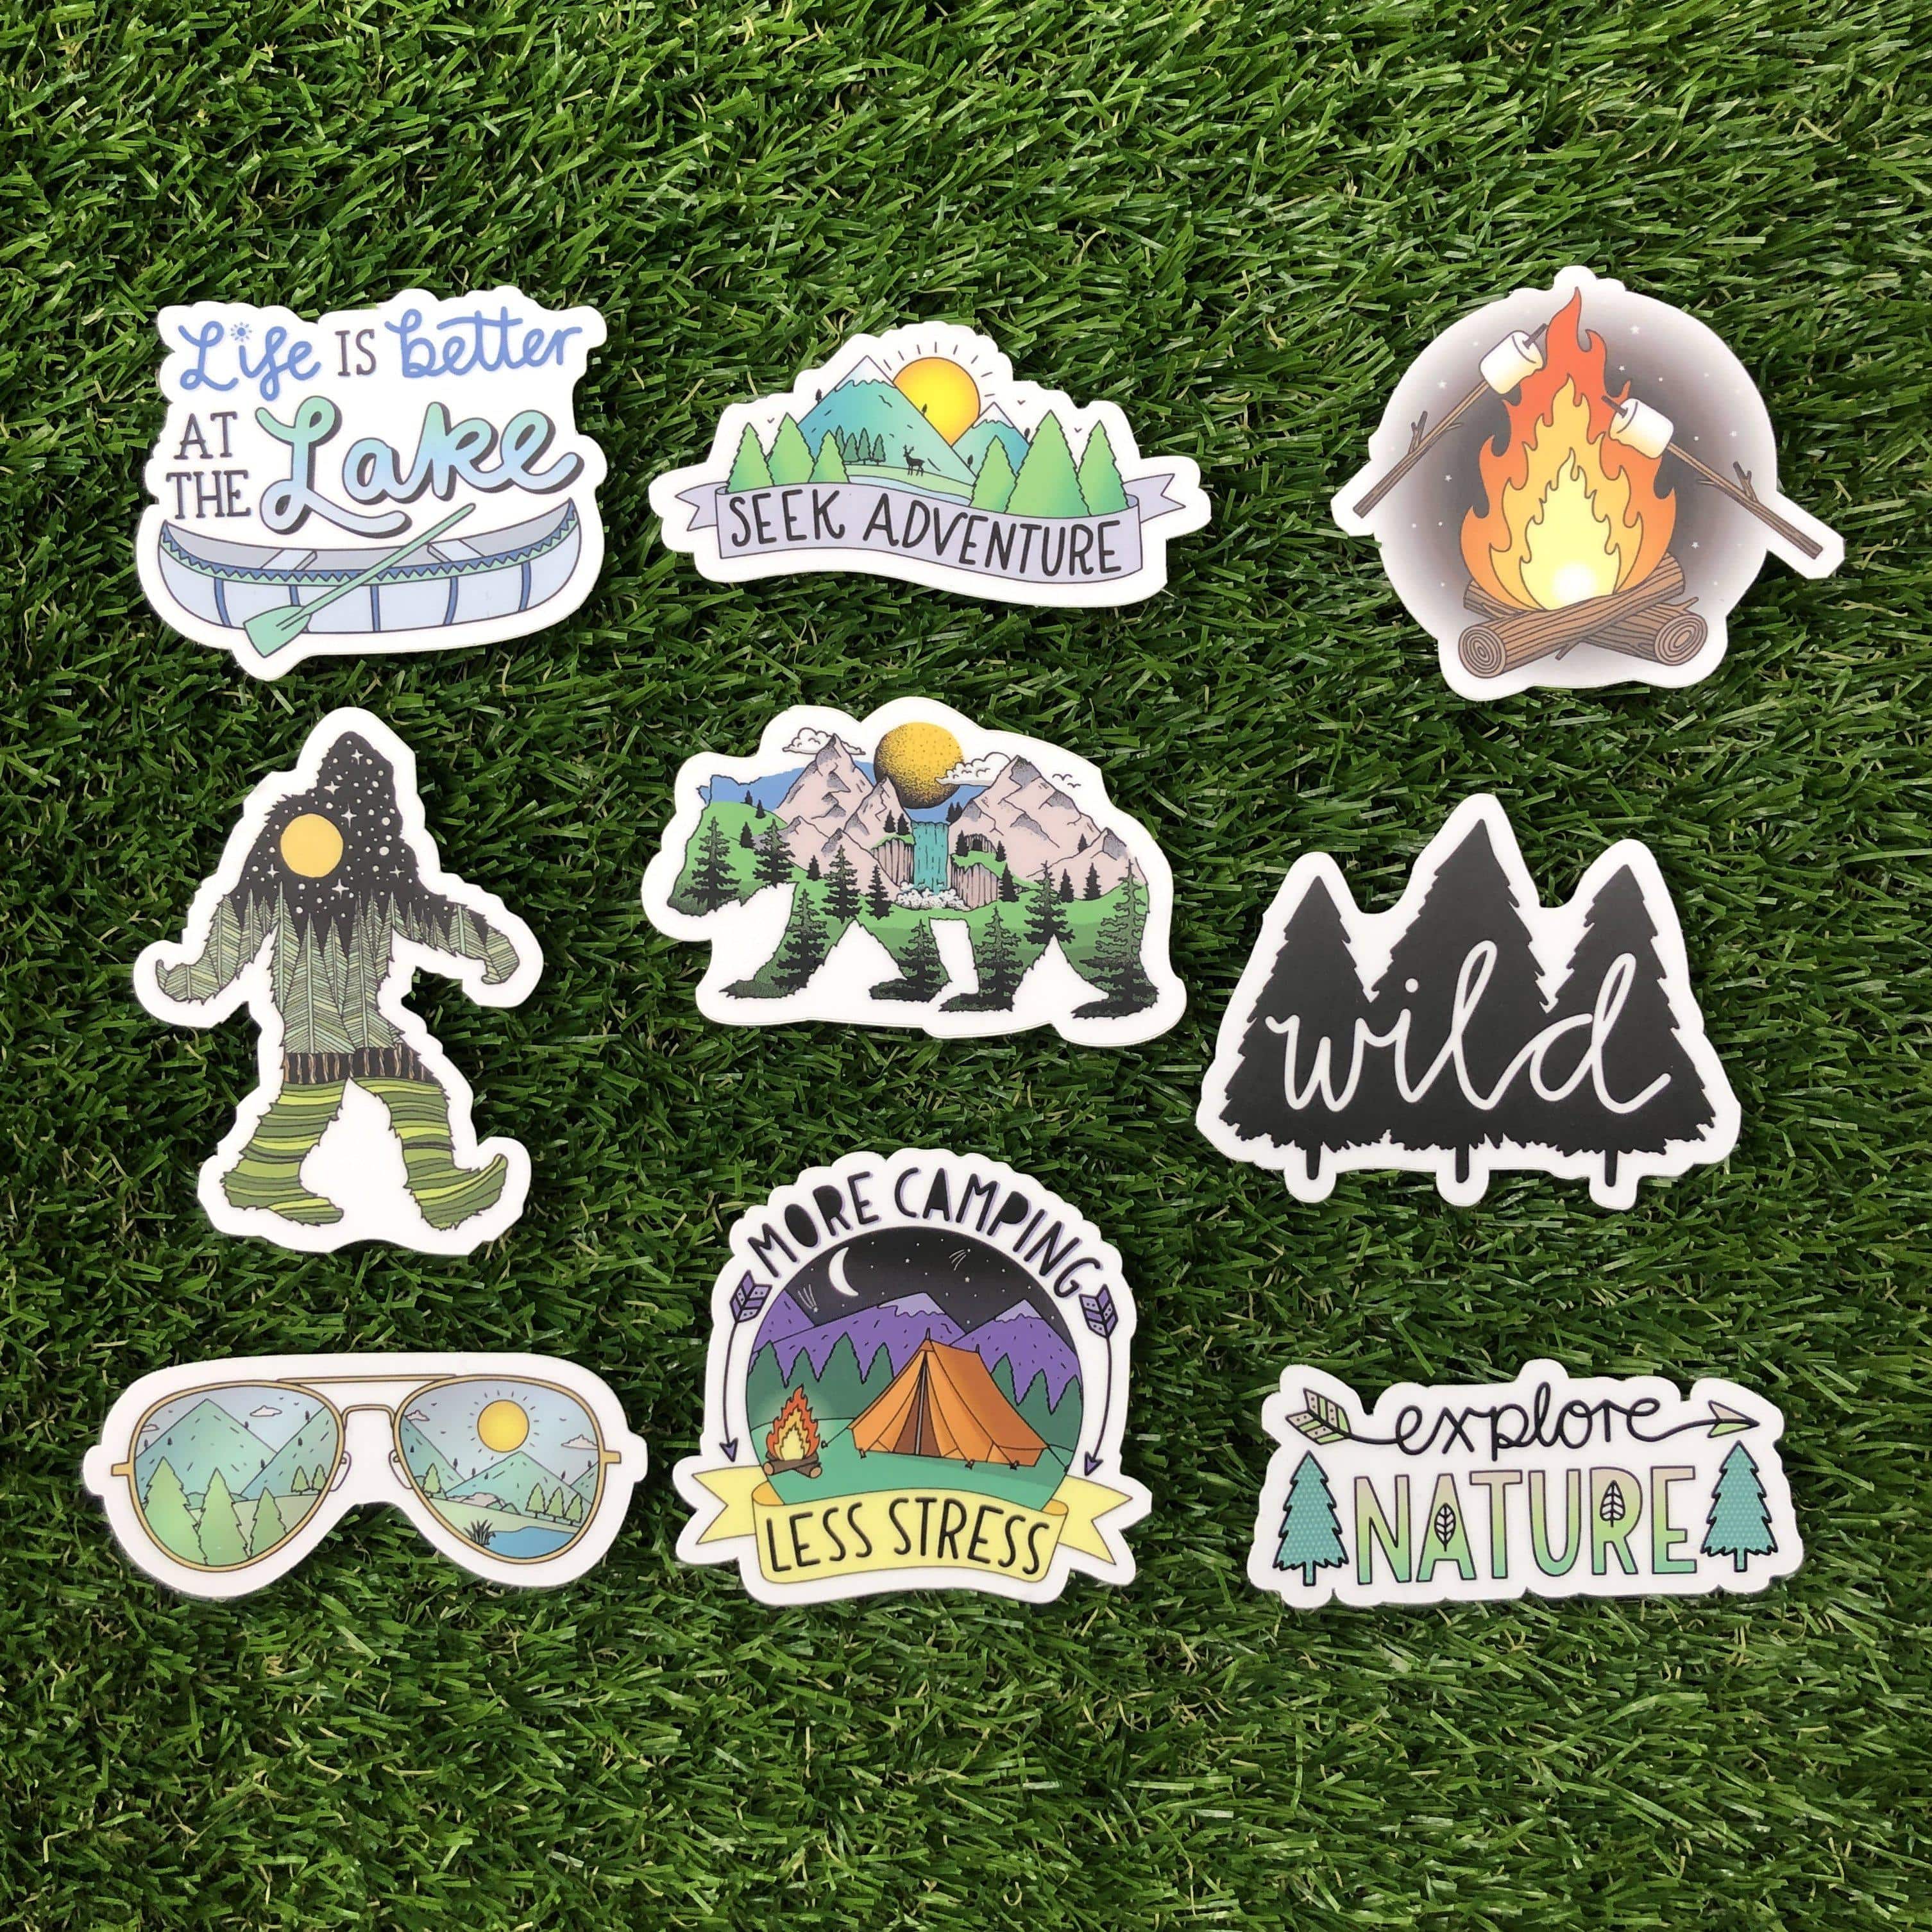 Rainforest Animal Stickers 8 Pack – Big Moods